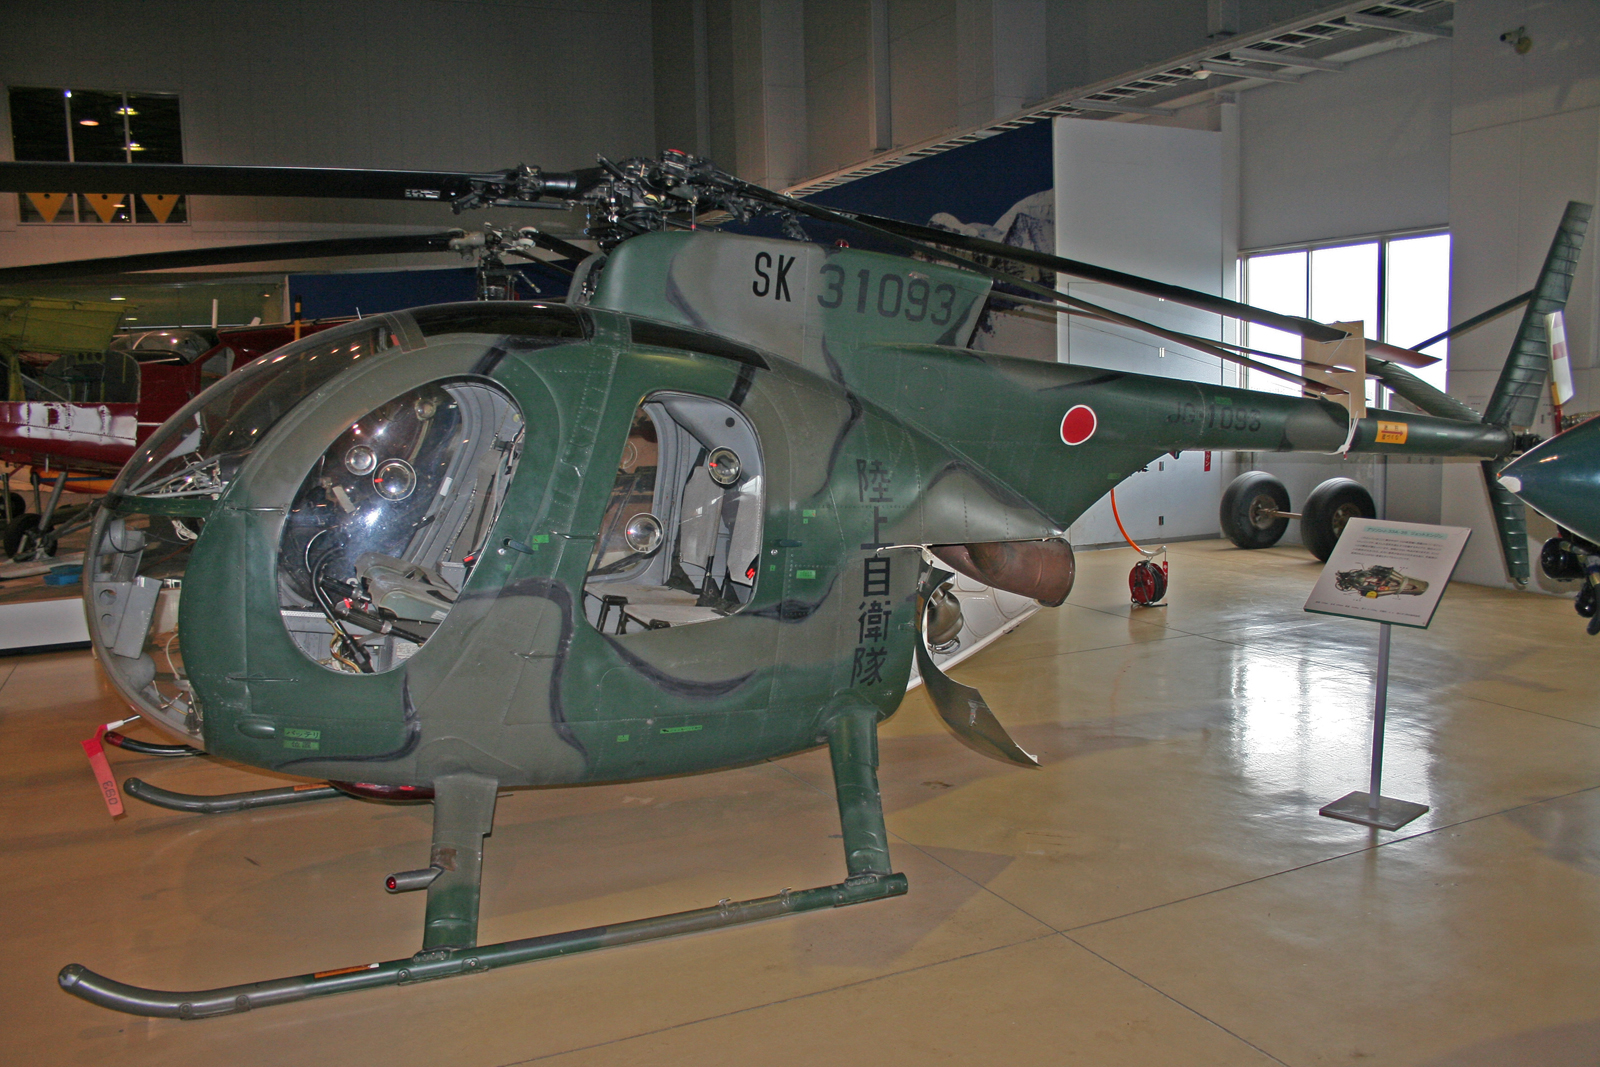 Kawasaki OH-6J 31093/SK Japan Ground Self-Defense Force